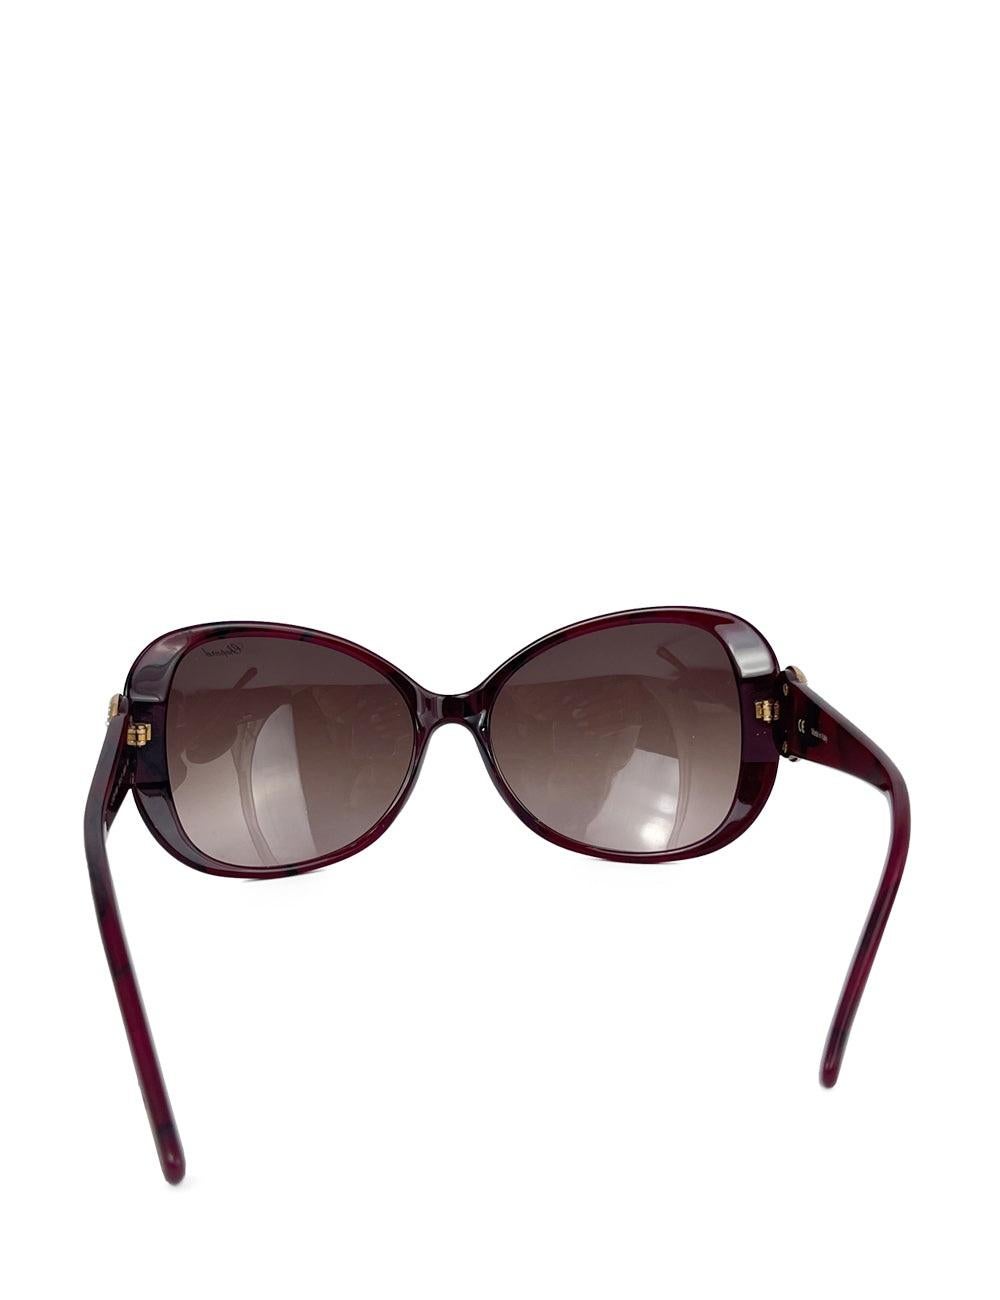 Black Chopard Deep Purple Sunglasses For Sale